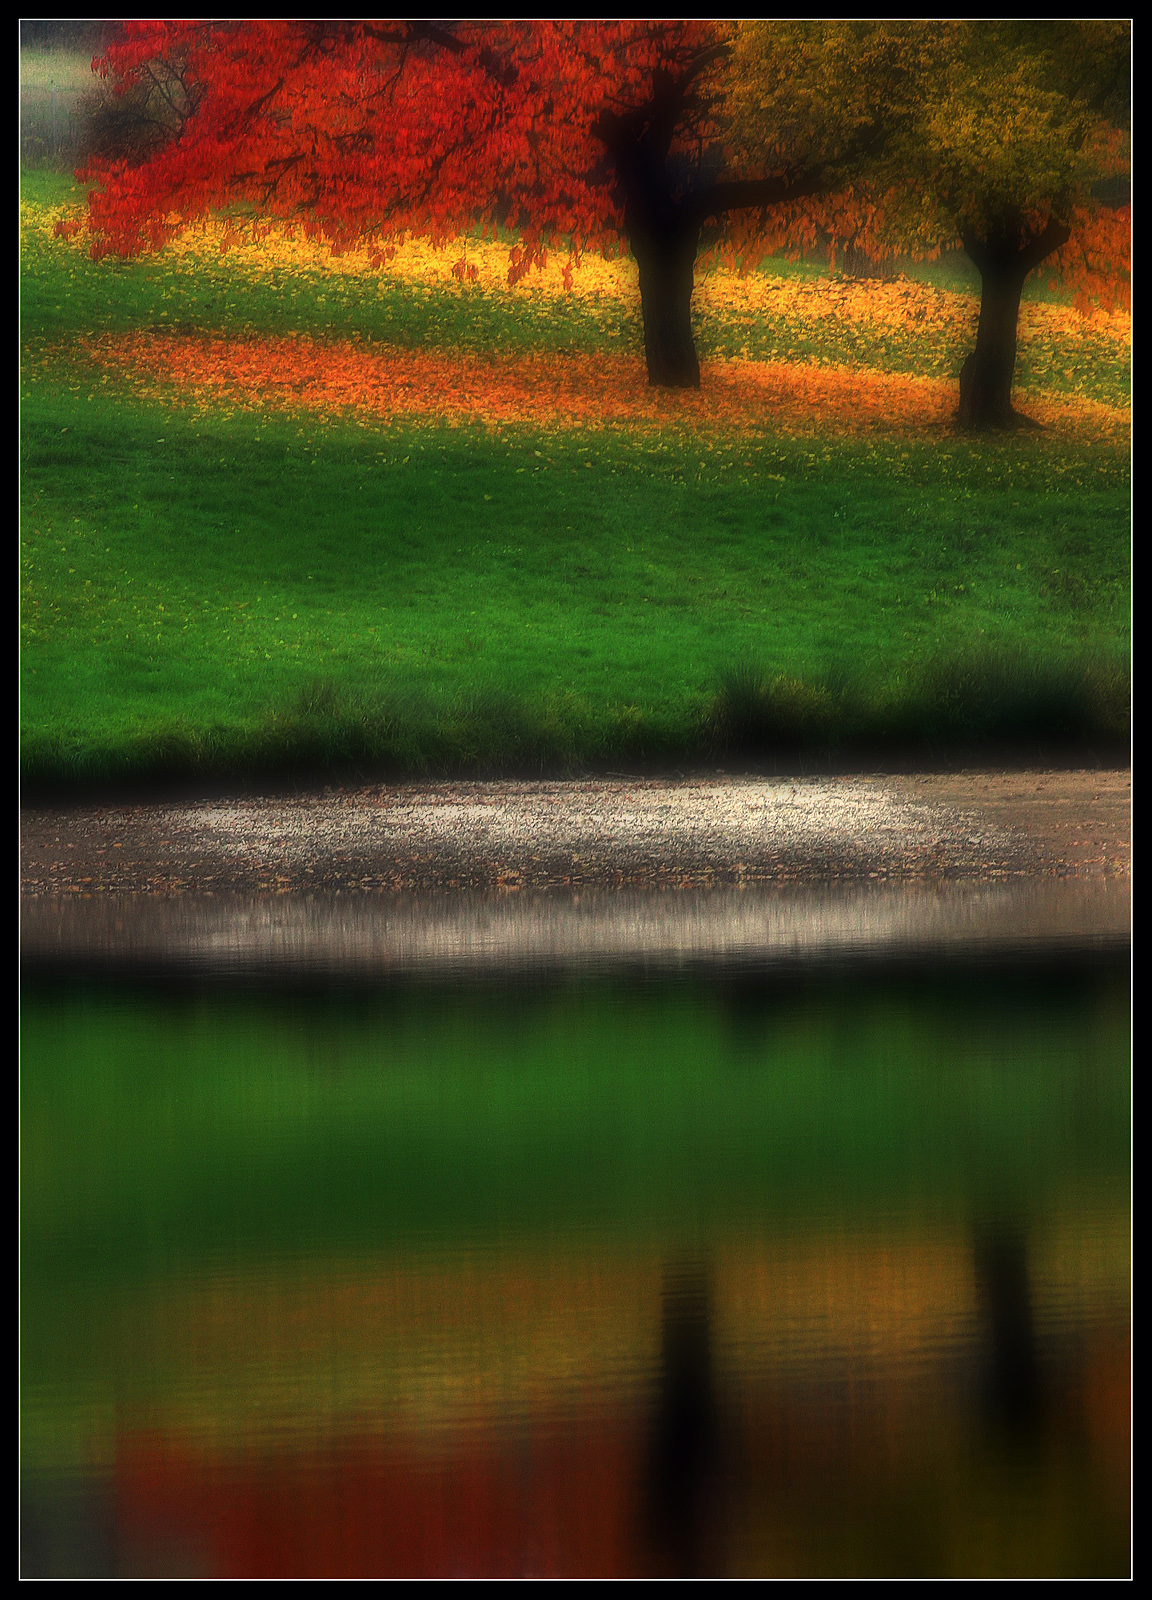 Podzimní fotoimpresionismus